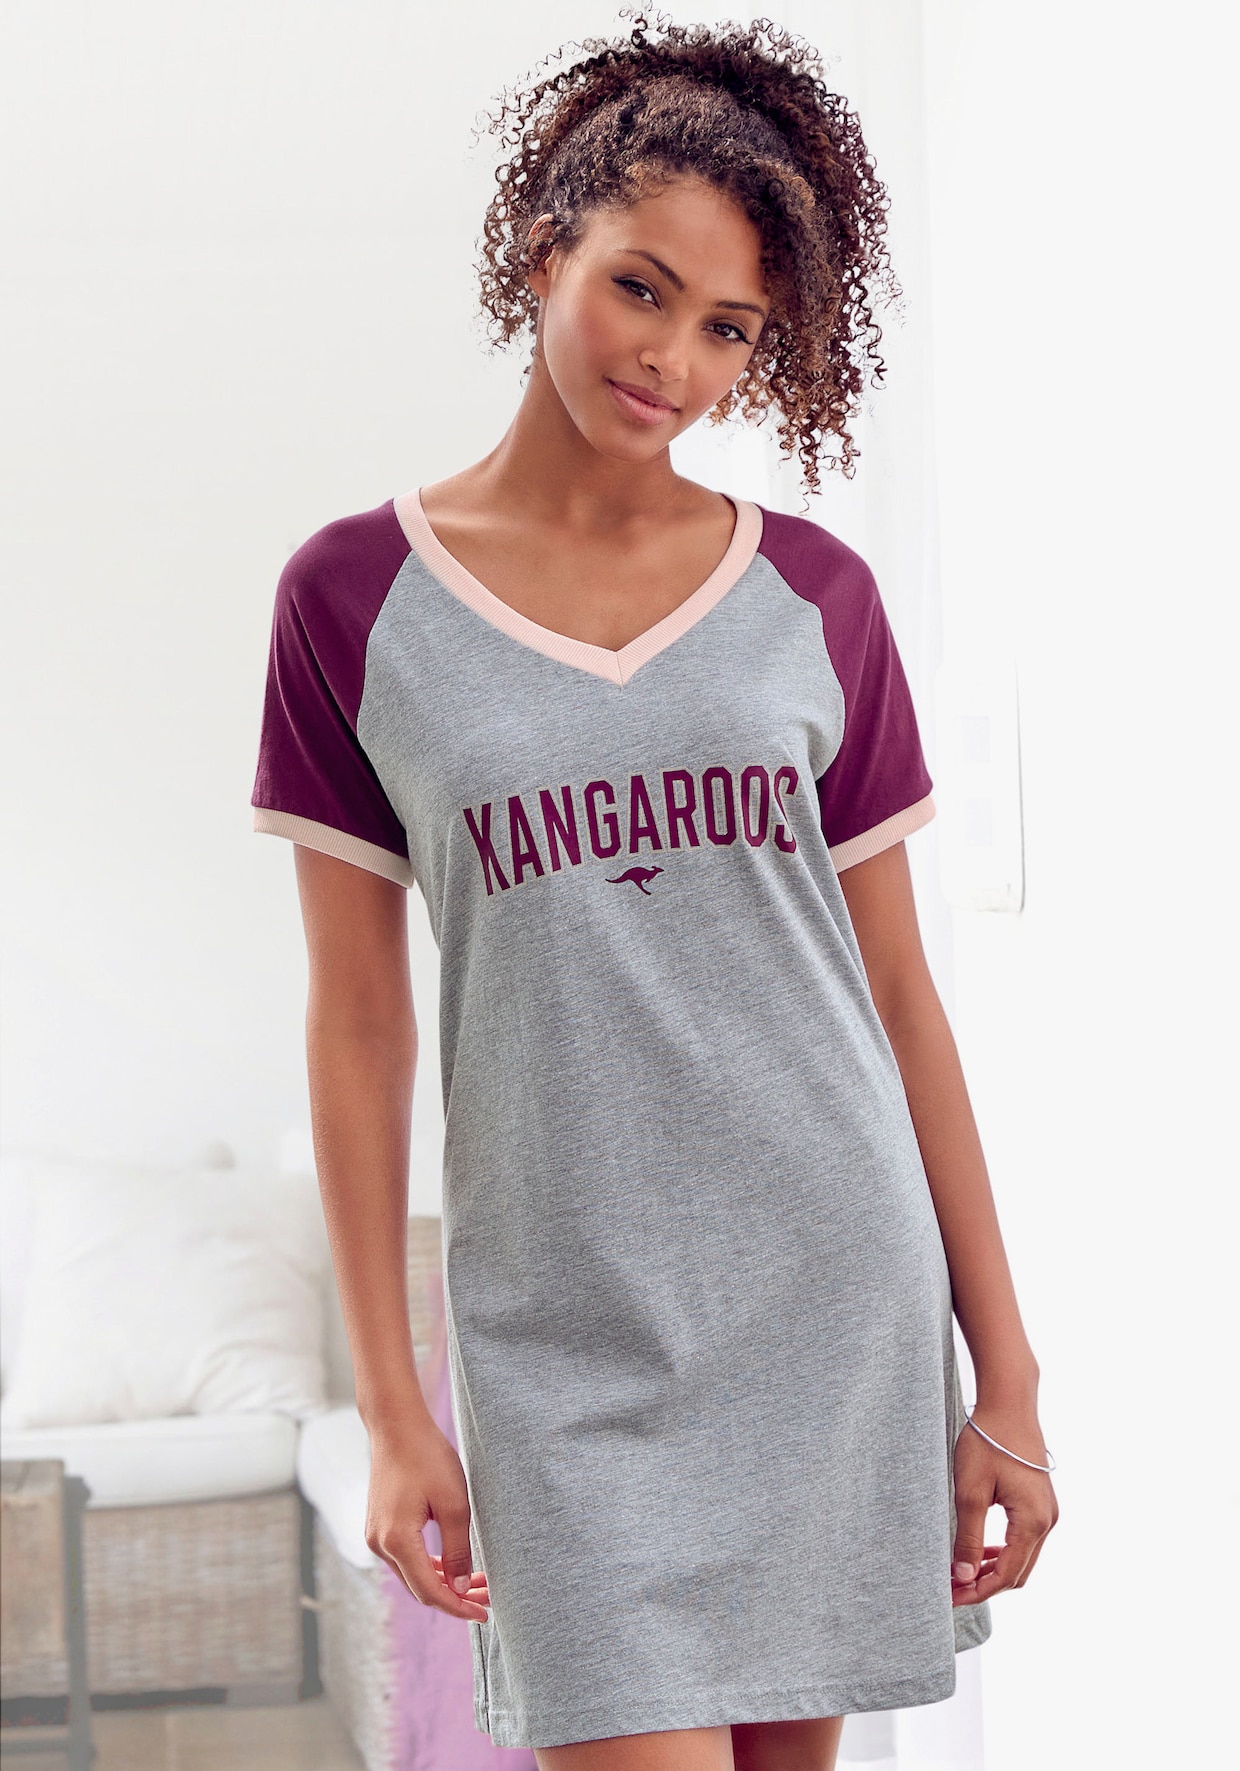 KangaROOS Bigshirt - bordeaux/grijs gemêleerd